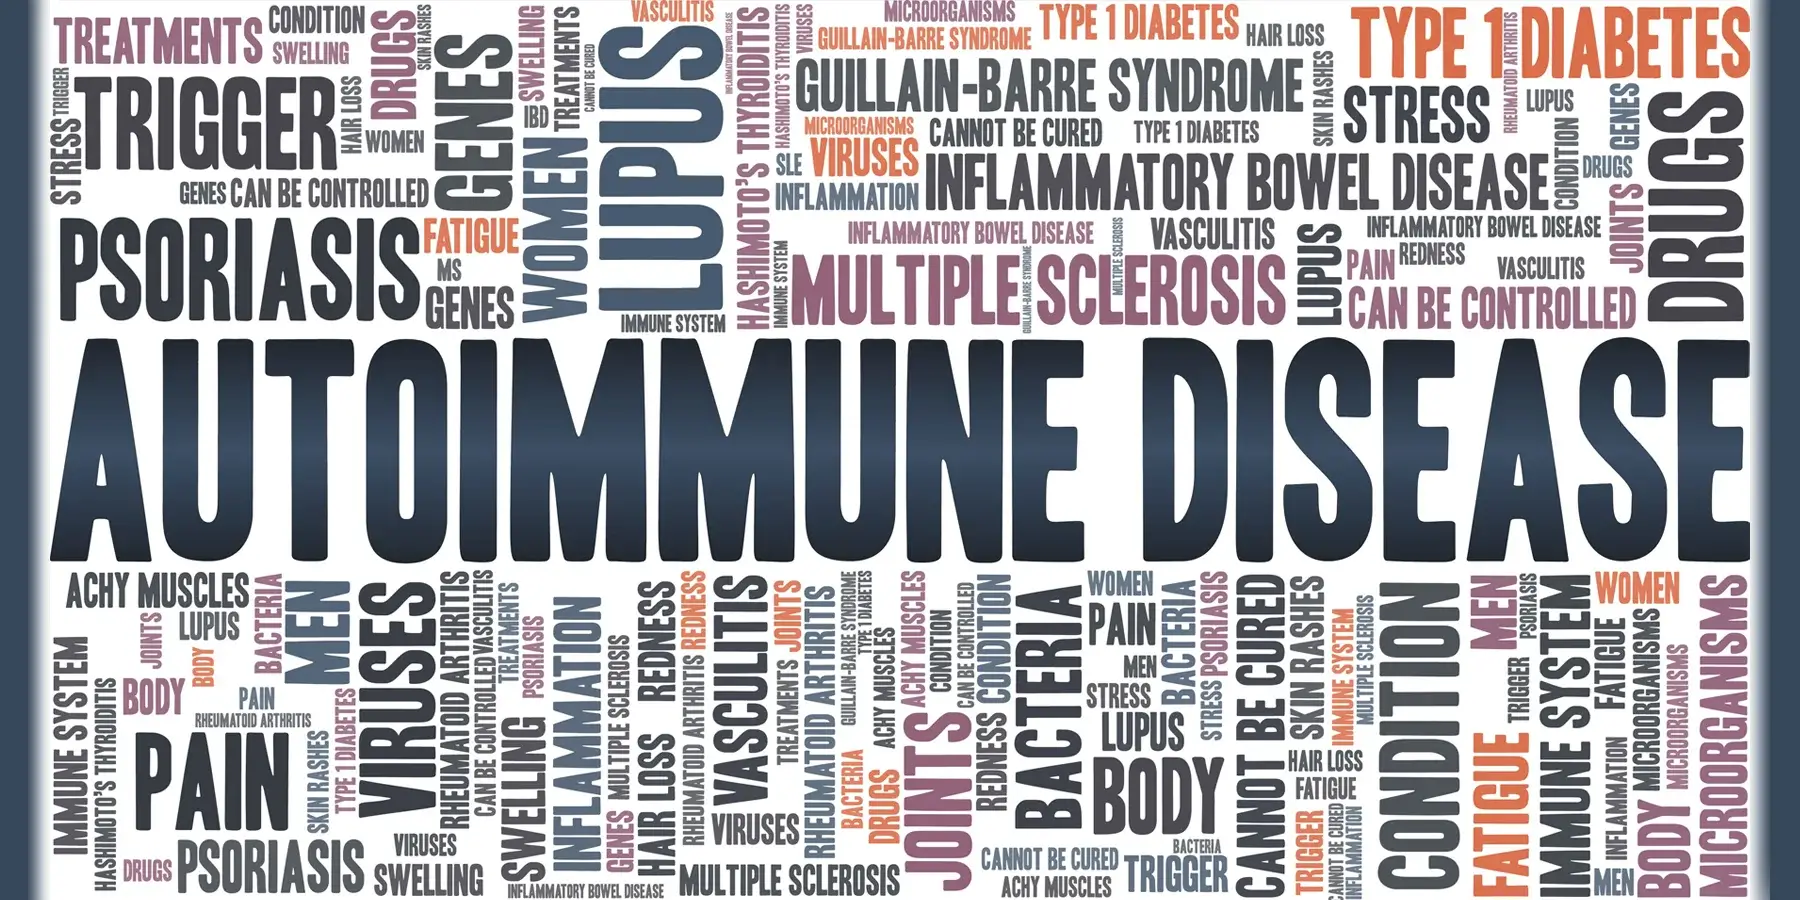 Can Lyme disease trigger Autoimmune diseases?